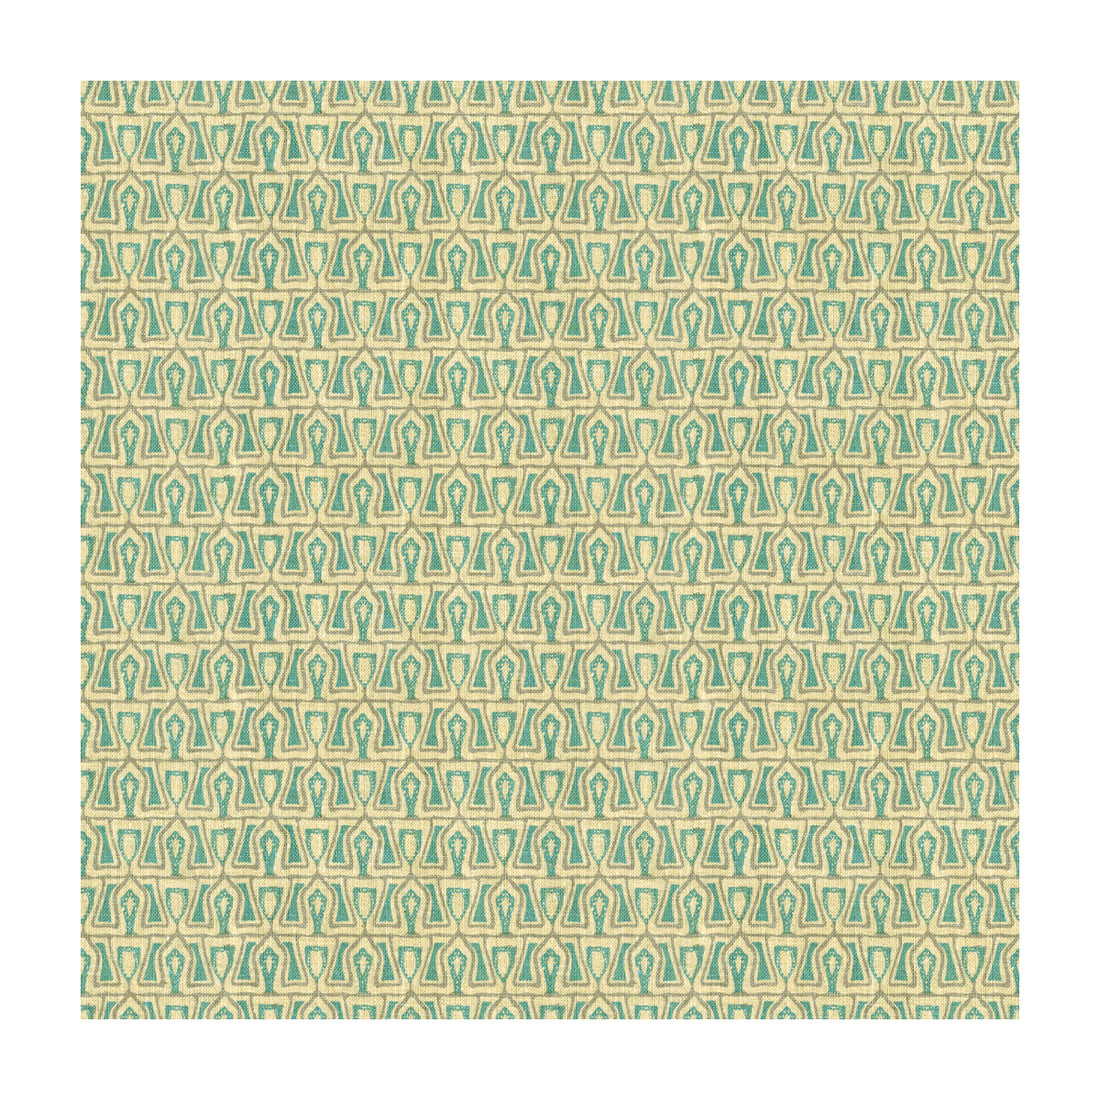 Passage fabric in cornflower color - pattern GWF-3505.5.0 - by Lee Jofa Modern in the Allegra Hicks Garden collection